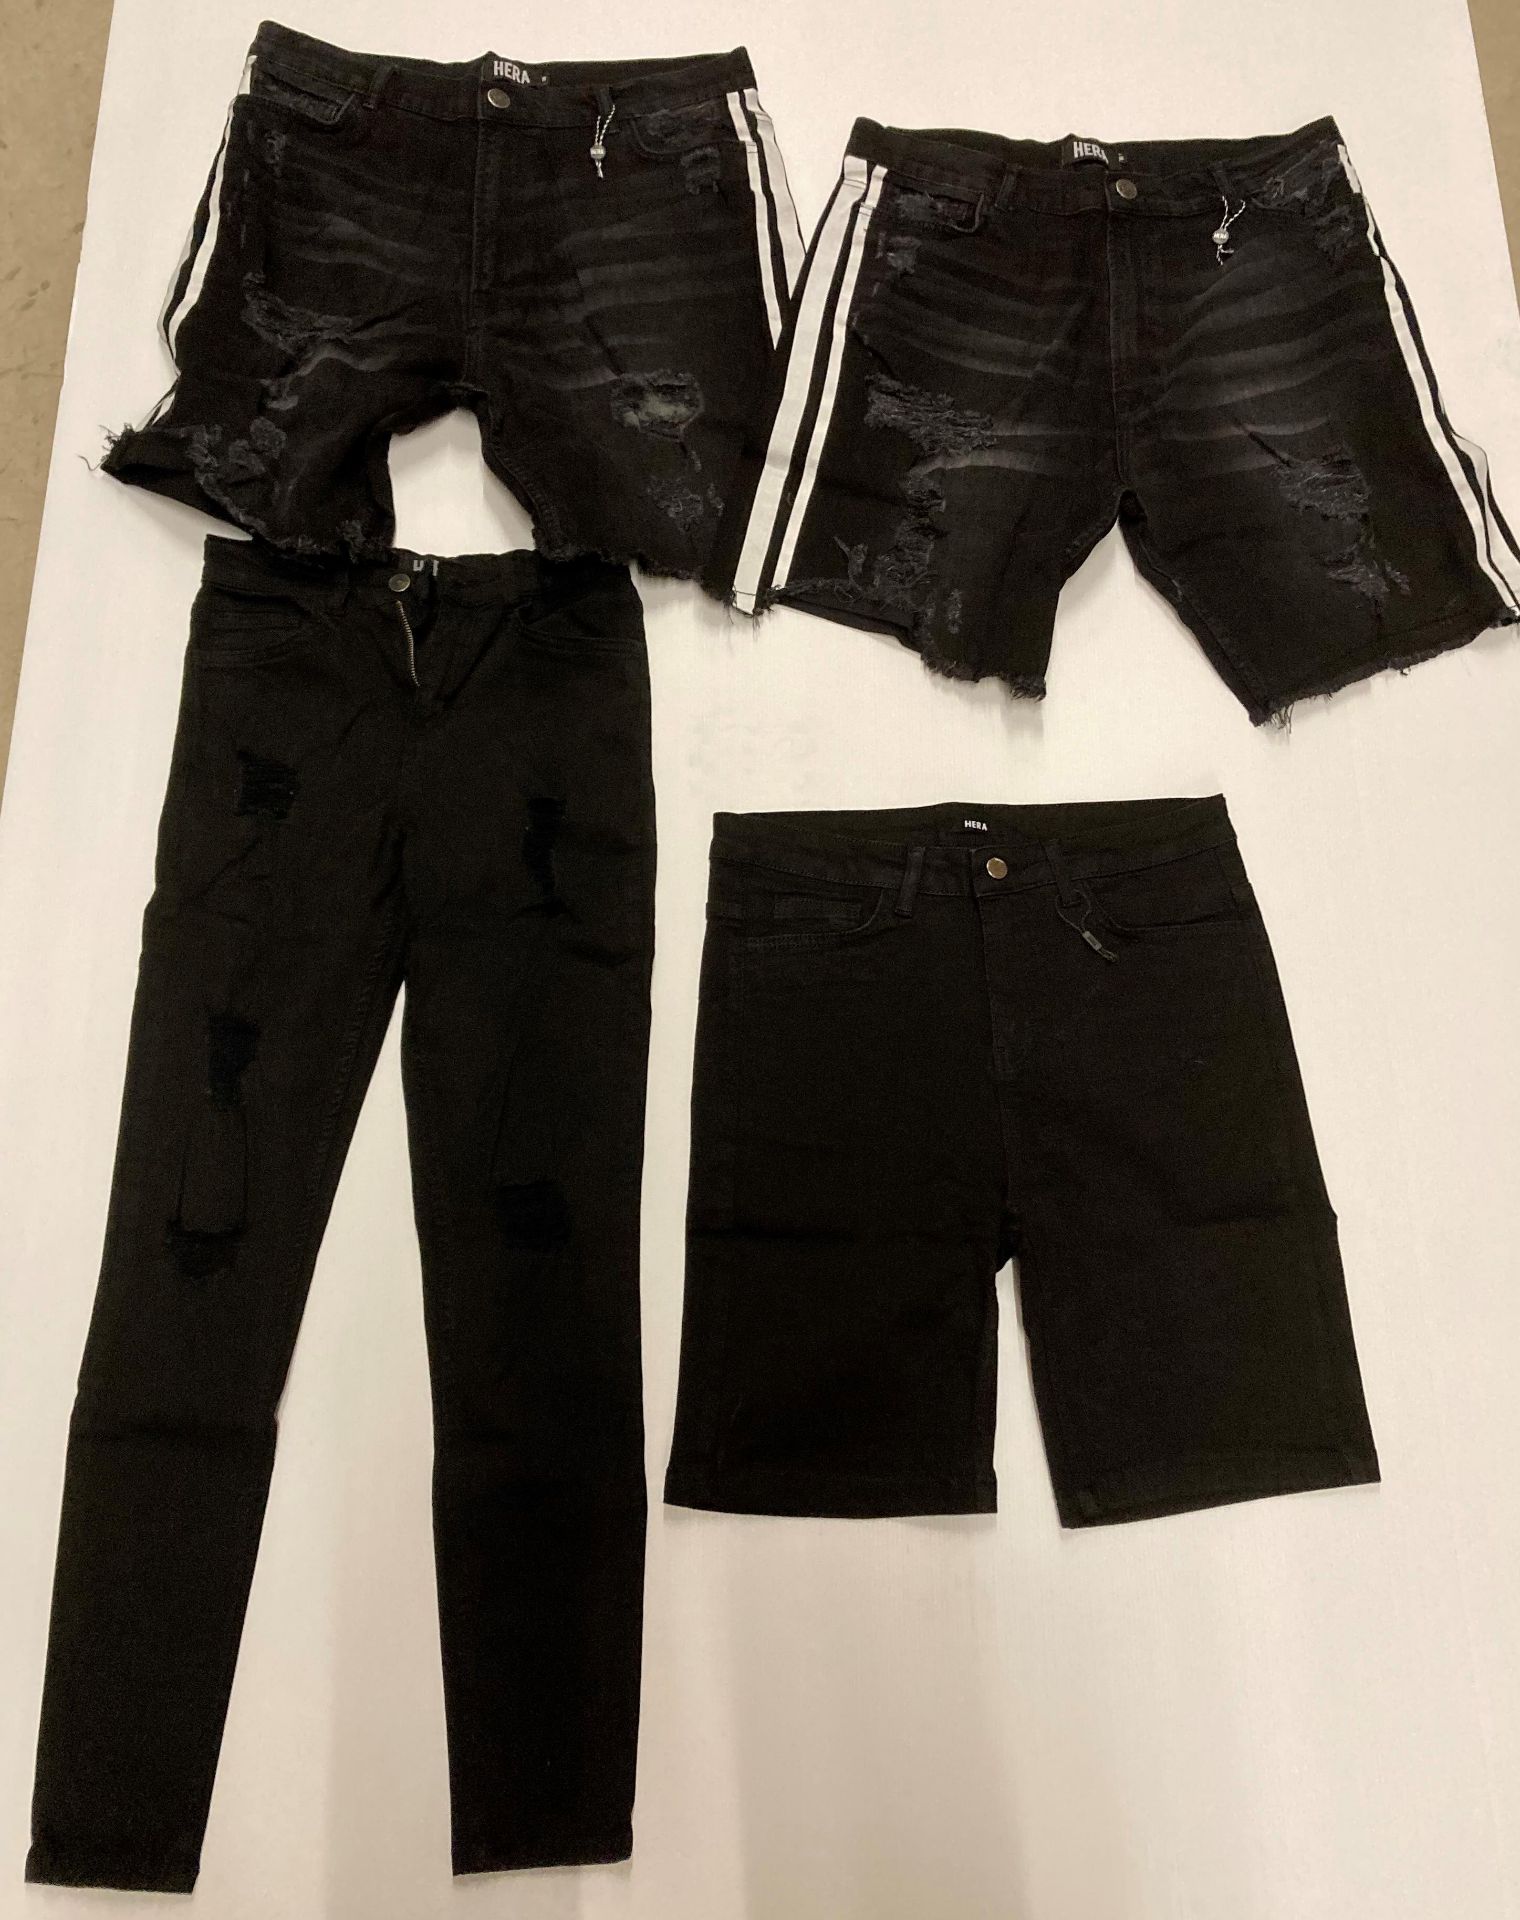 5 x items - 4 x Hera blue denim shorts (size 30) and 1 x Hera black denim shorts (size 28)